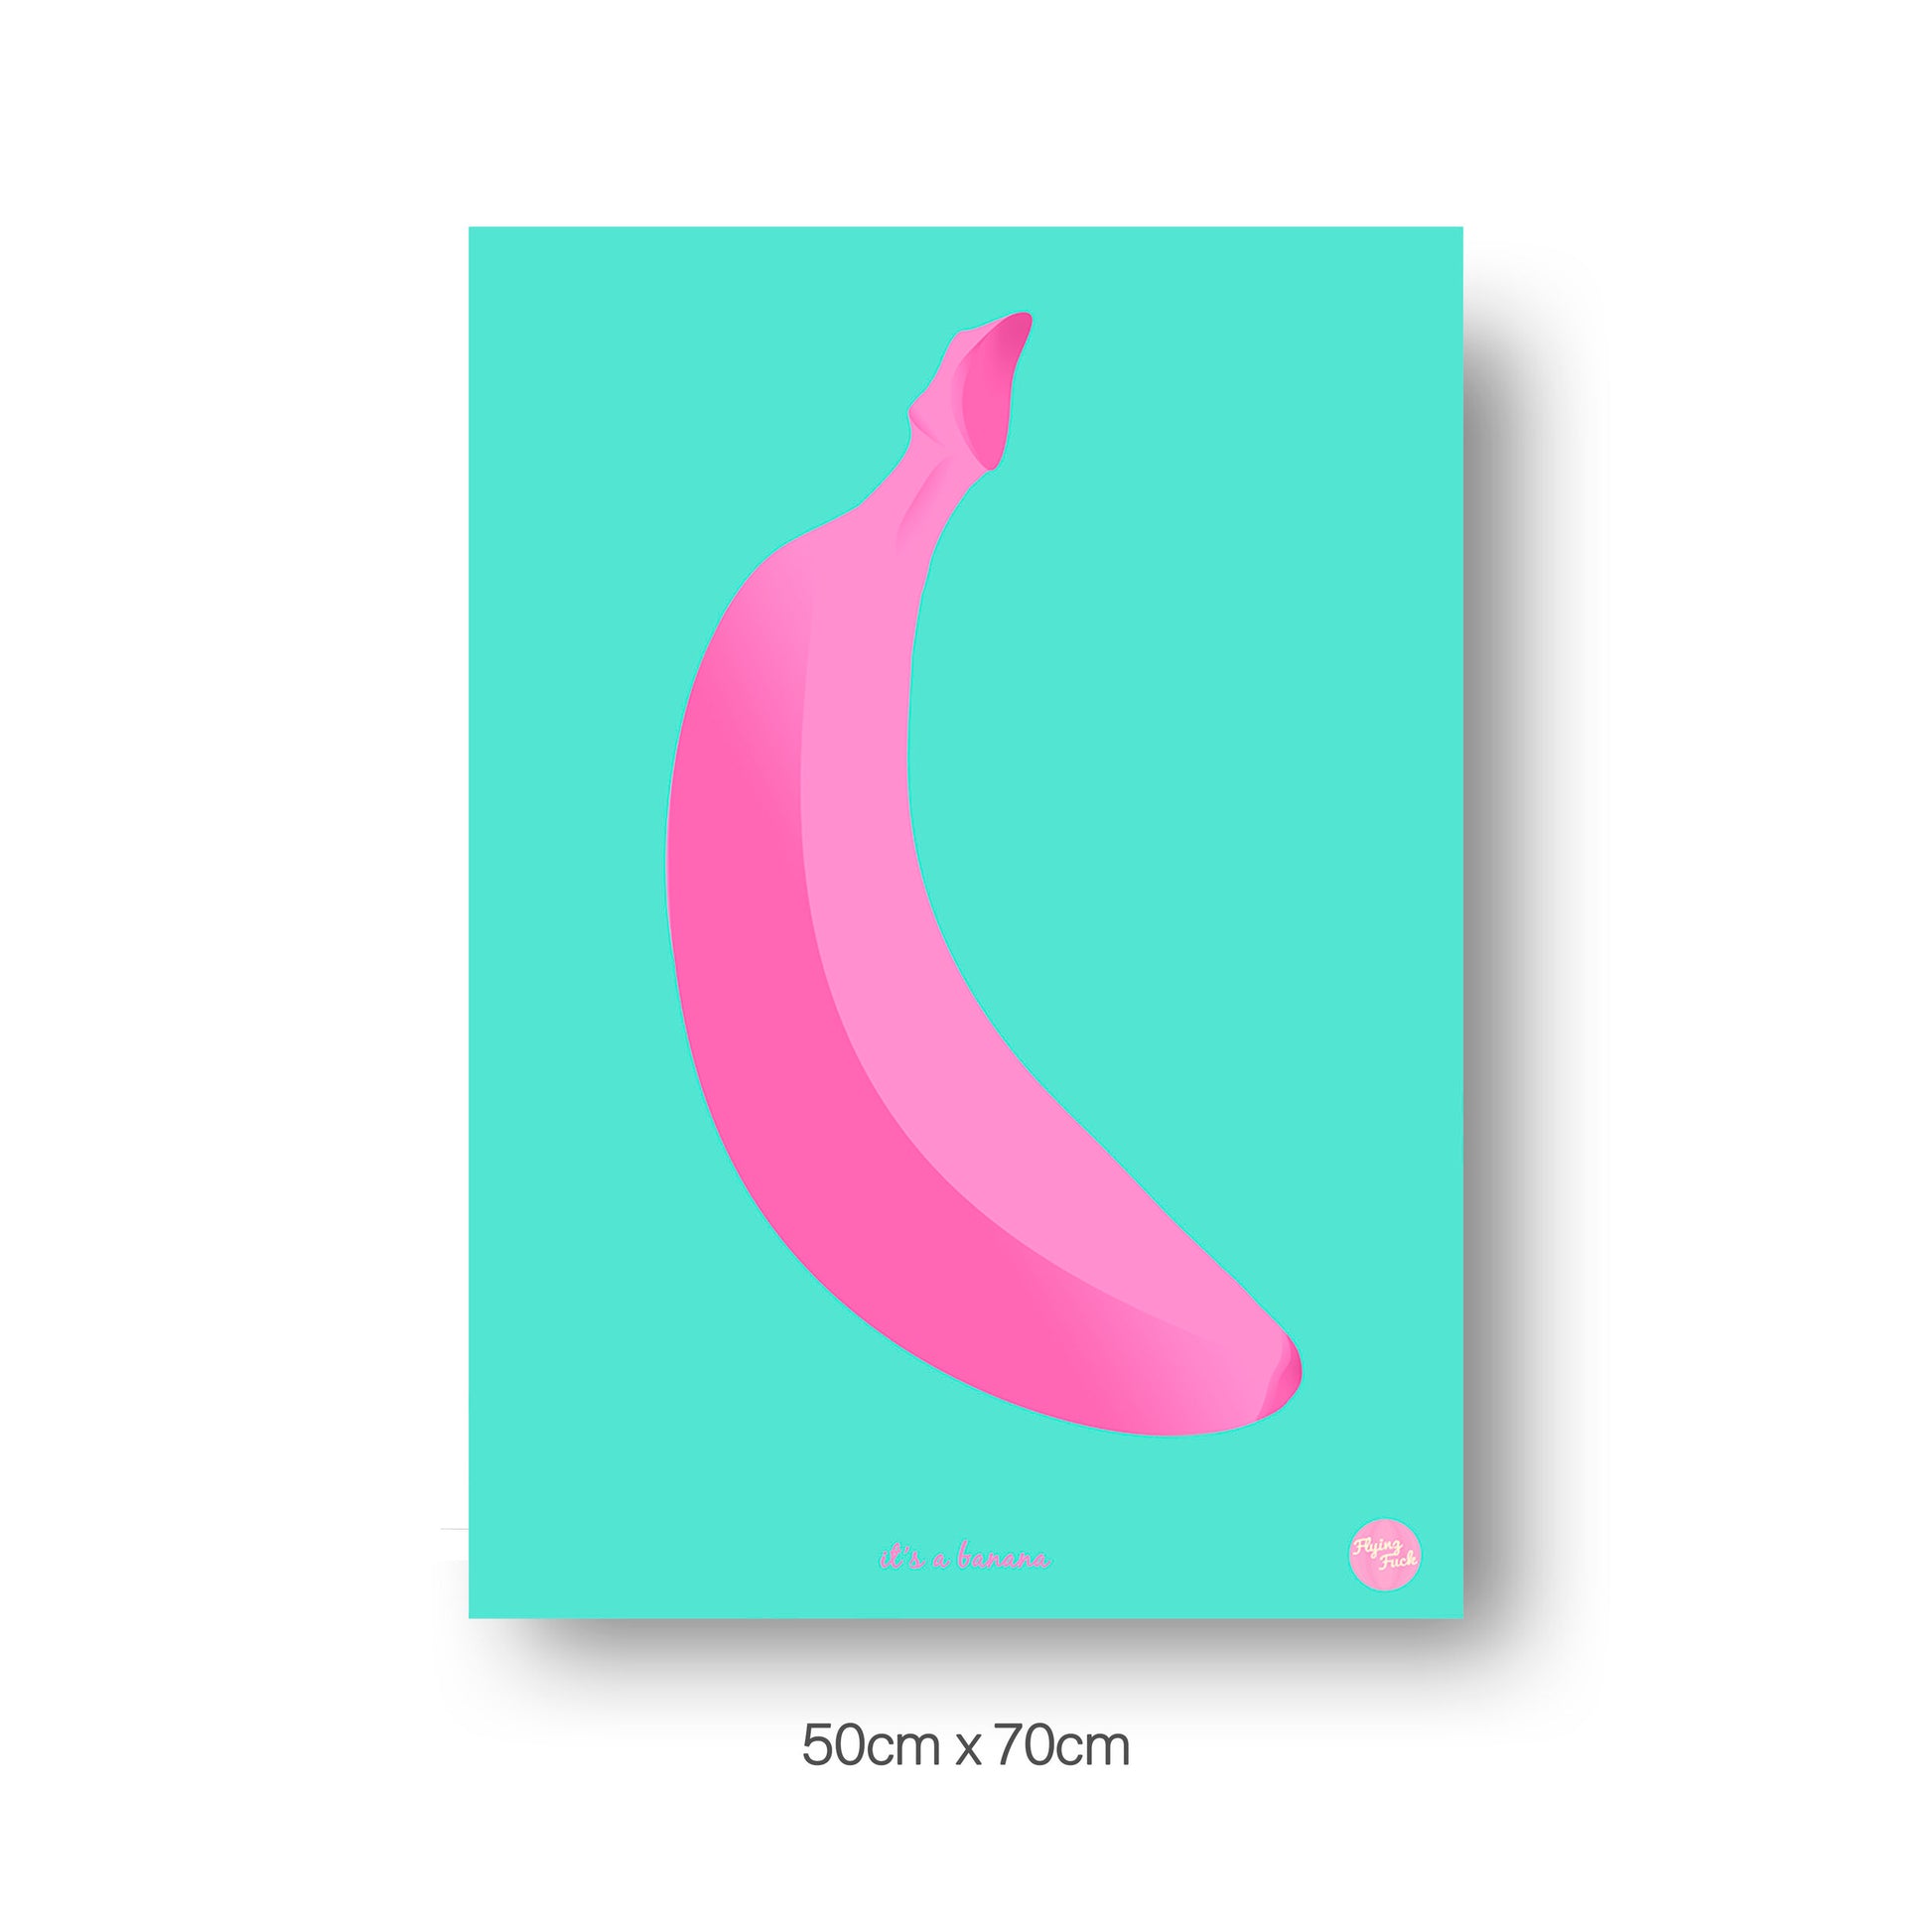 NOKUKO - art - Flying Fuck - It's a banana - Green Pink 50cmx70cm print